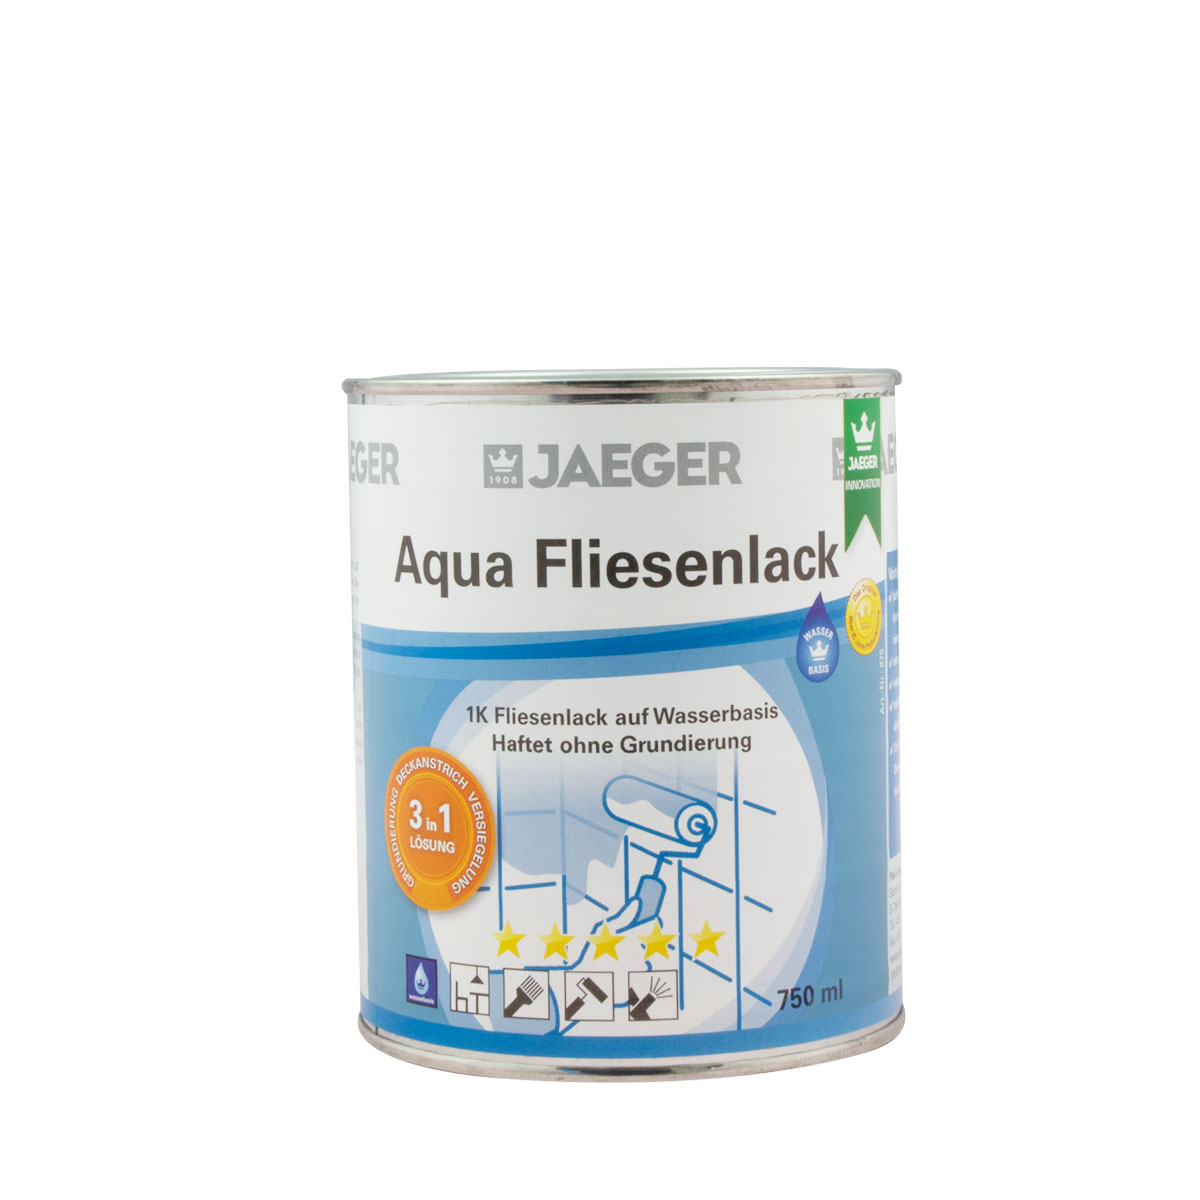 Jaeger Aqua Fliesenlack 875 cotone(sandbeige) 750ml, 3 in 1 System